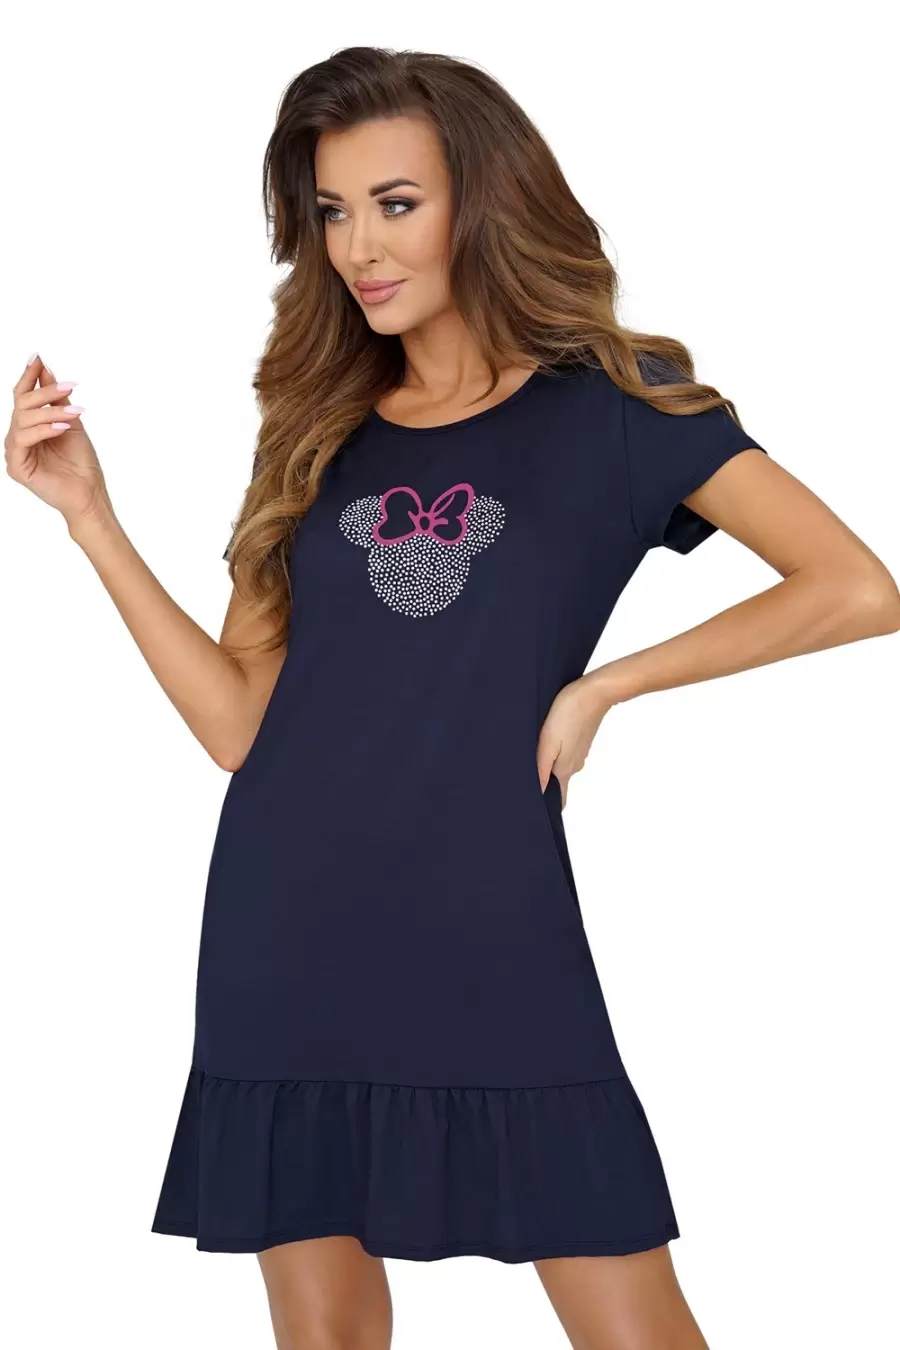 Donna Mouse Nightdress, сорочка (S темно-синий) (изображение 1)